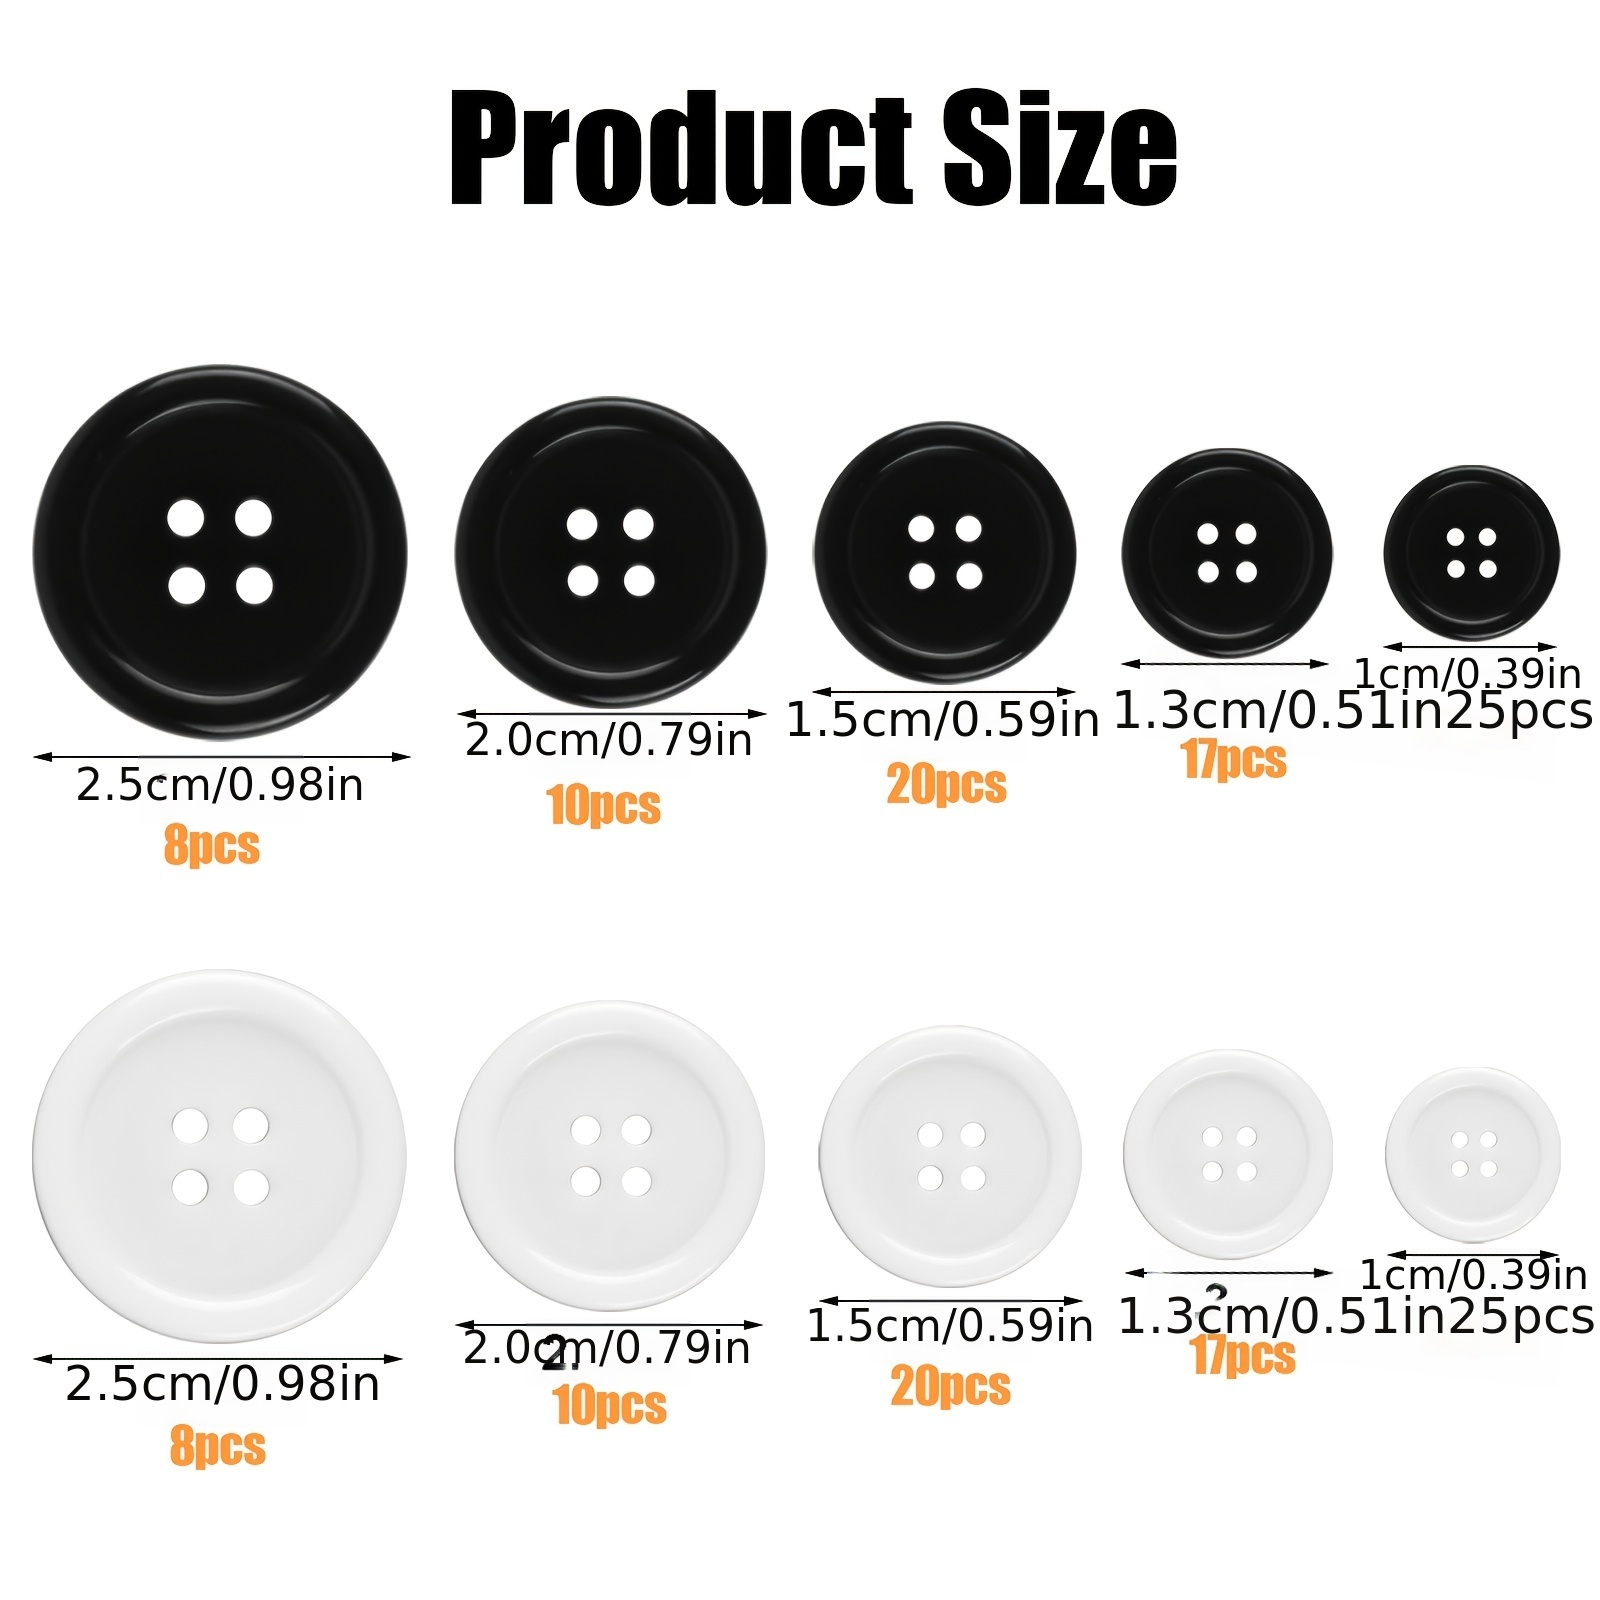 100 Pcs Black Buttons, Black Buttons for Crafts, 4-Hole Buttons for Sewing,  5 Sizes, Buttons Black, Shirt Buttons, Black Button, Small Black Buttons